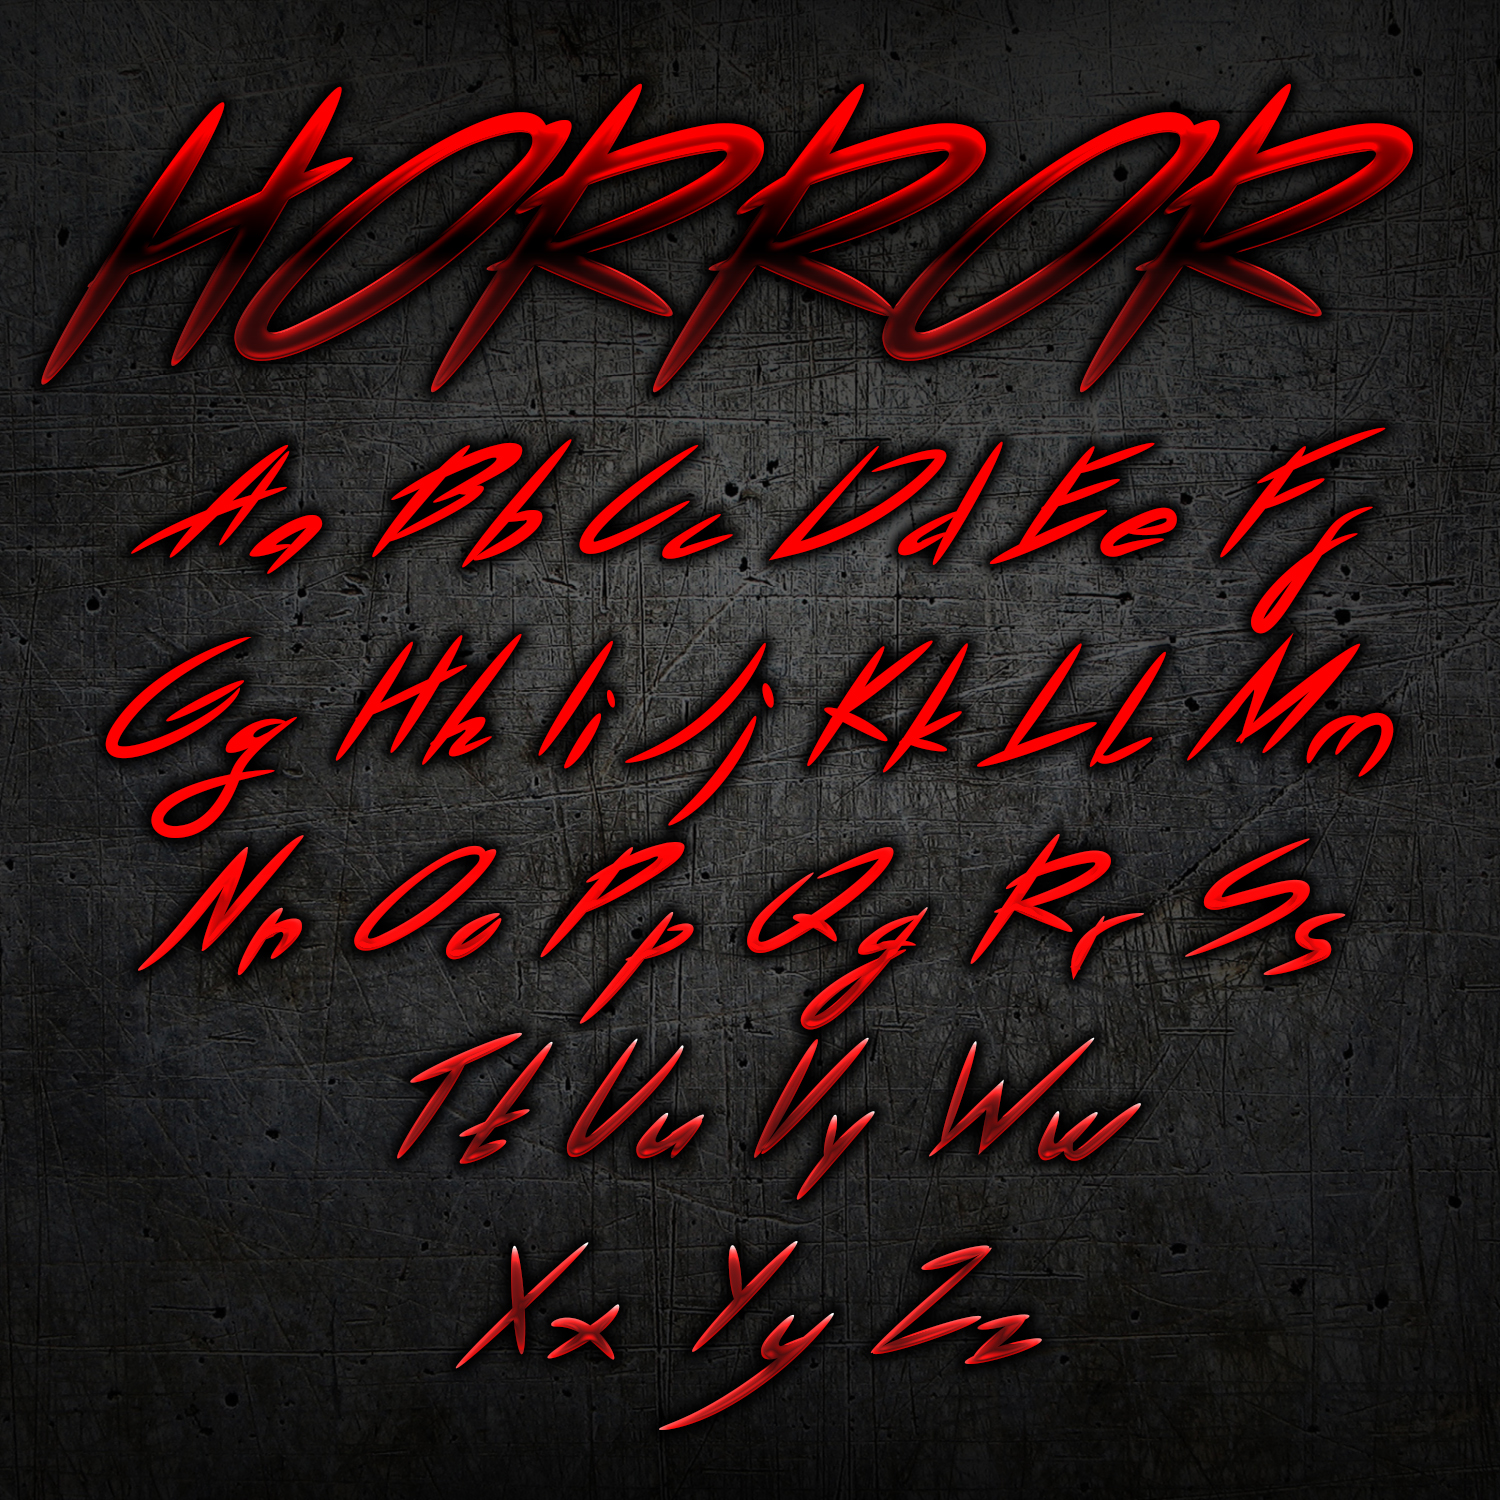 Presentation of the alphabet using blood style.